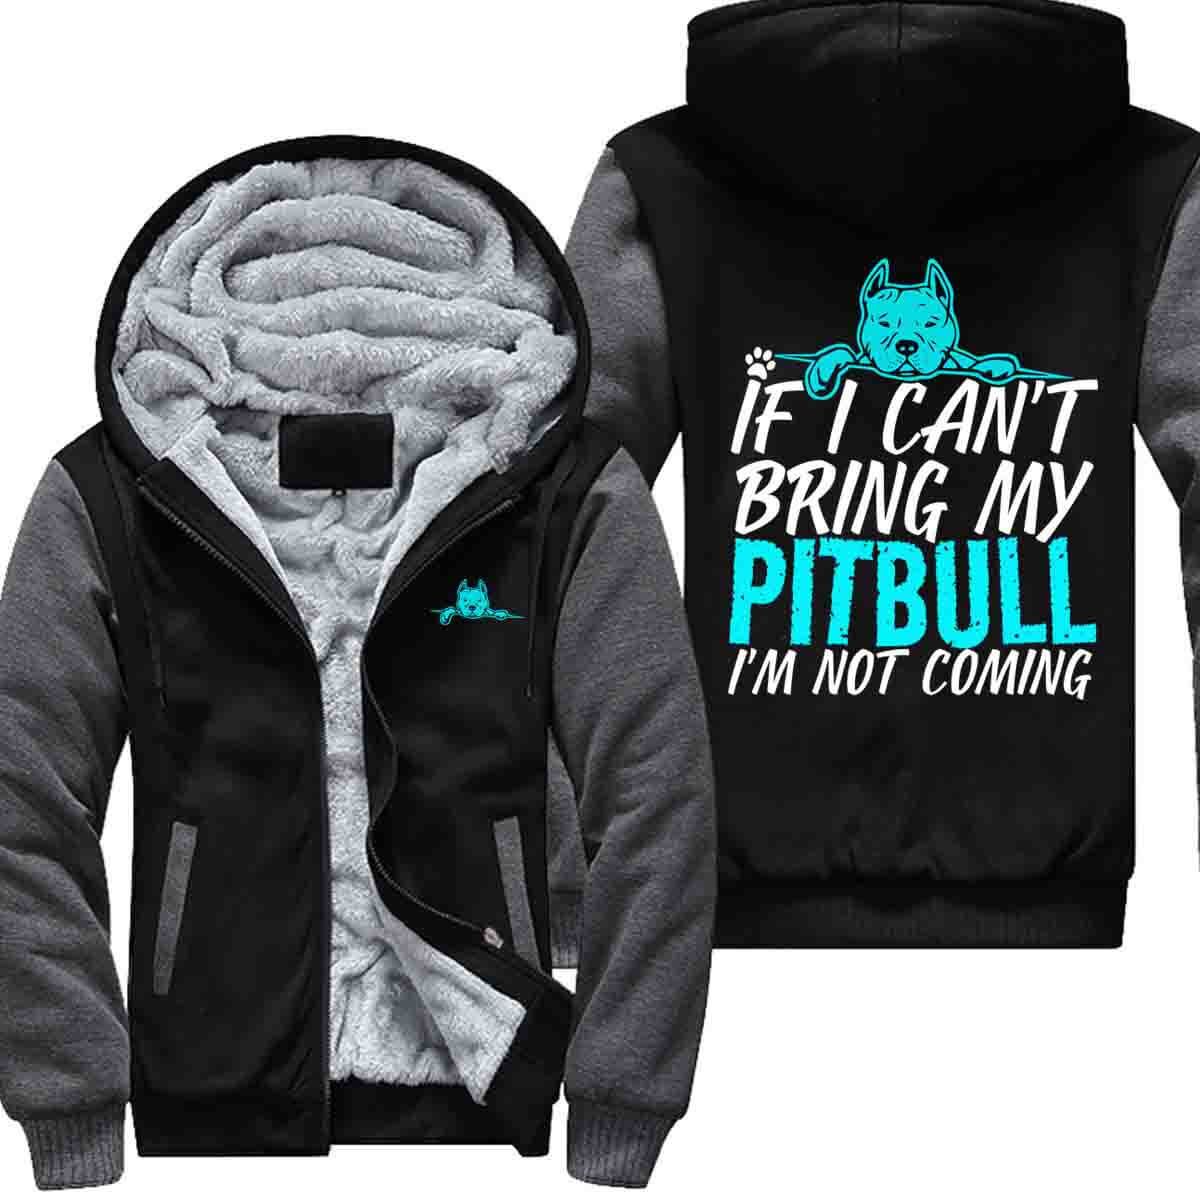 If I Can't Bring My Pitbull - Jacket